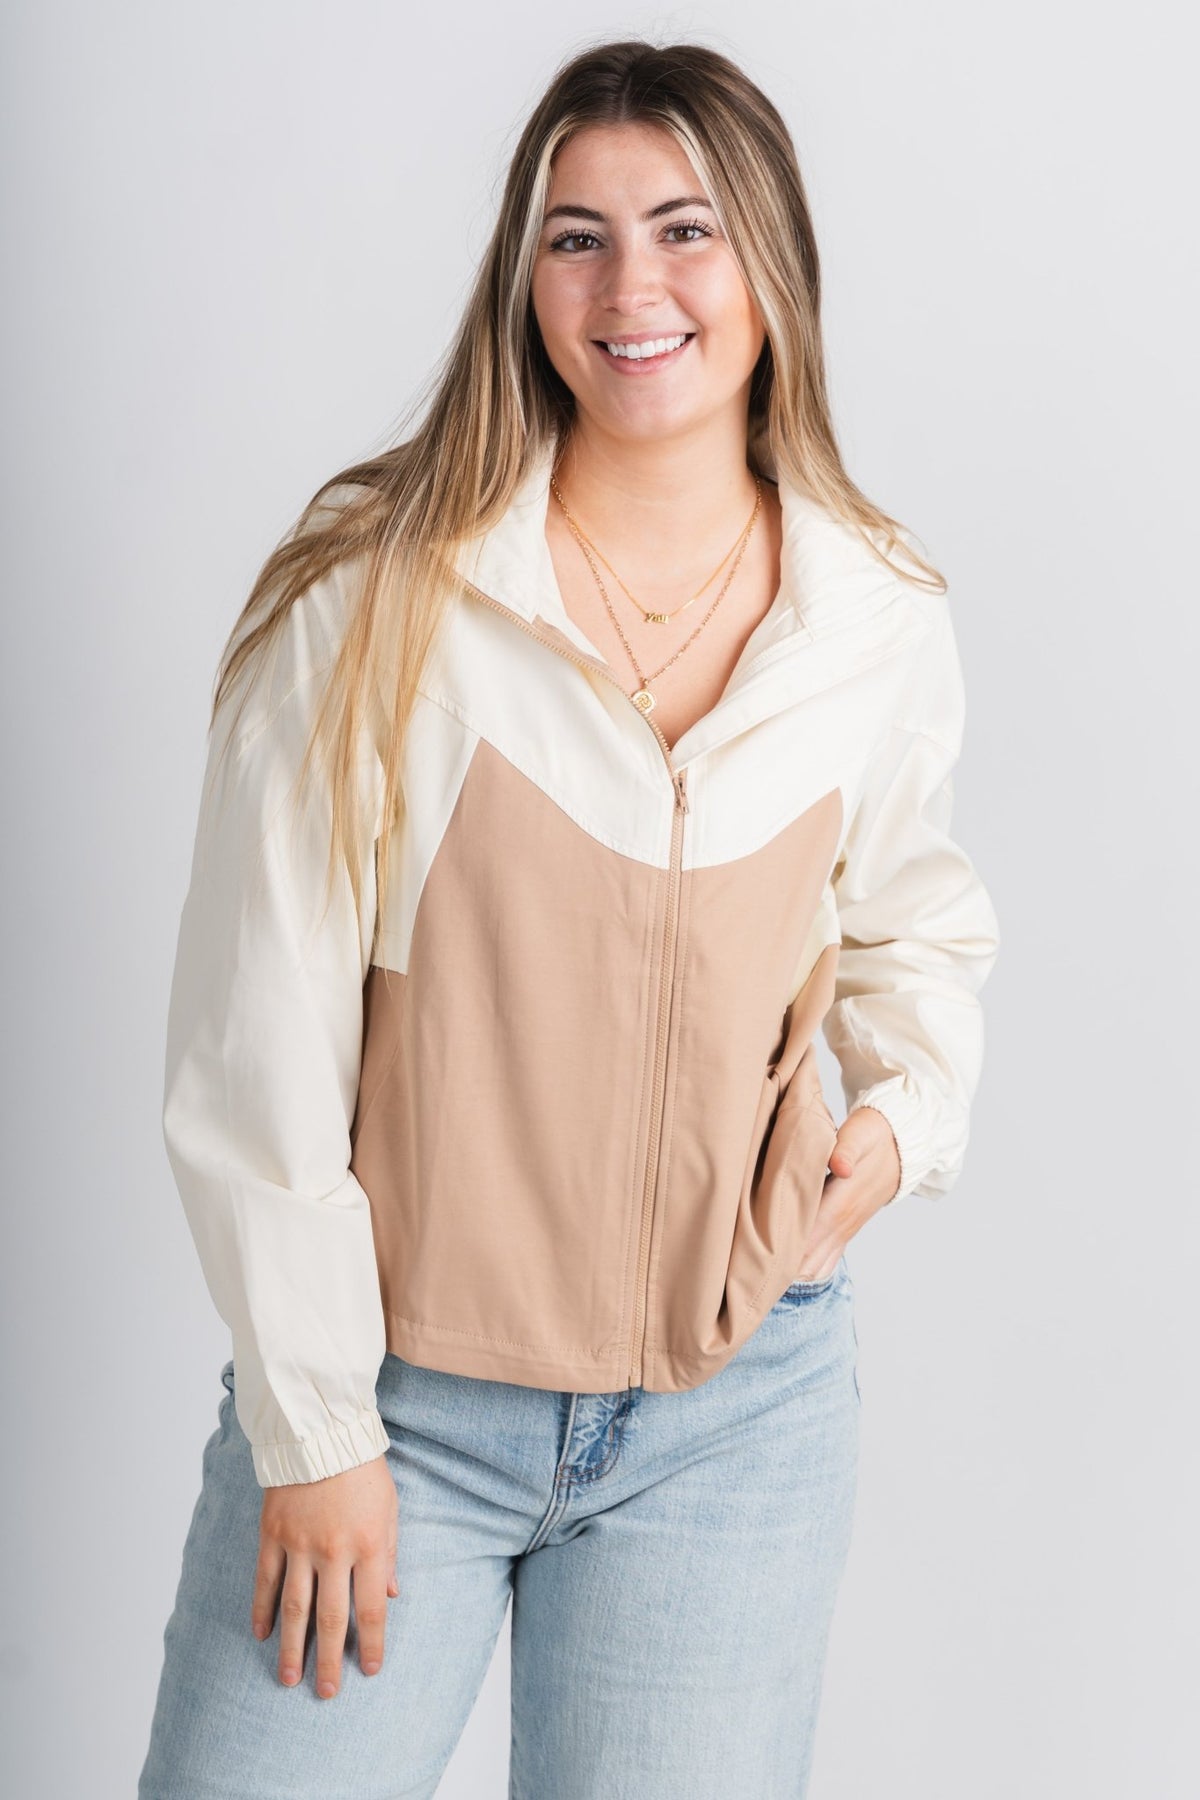 Color block zip jacket vanilla/mocha – Trendy Jackets | Cute Fashion Blazers at Lush Fashion Lounge Boutique in Oklahoma City